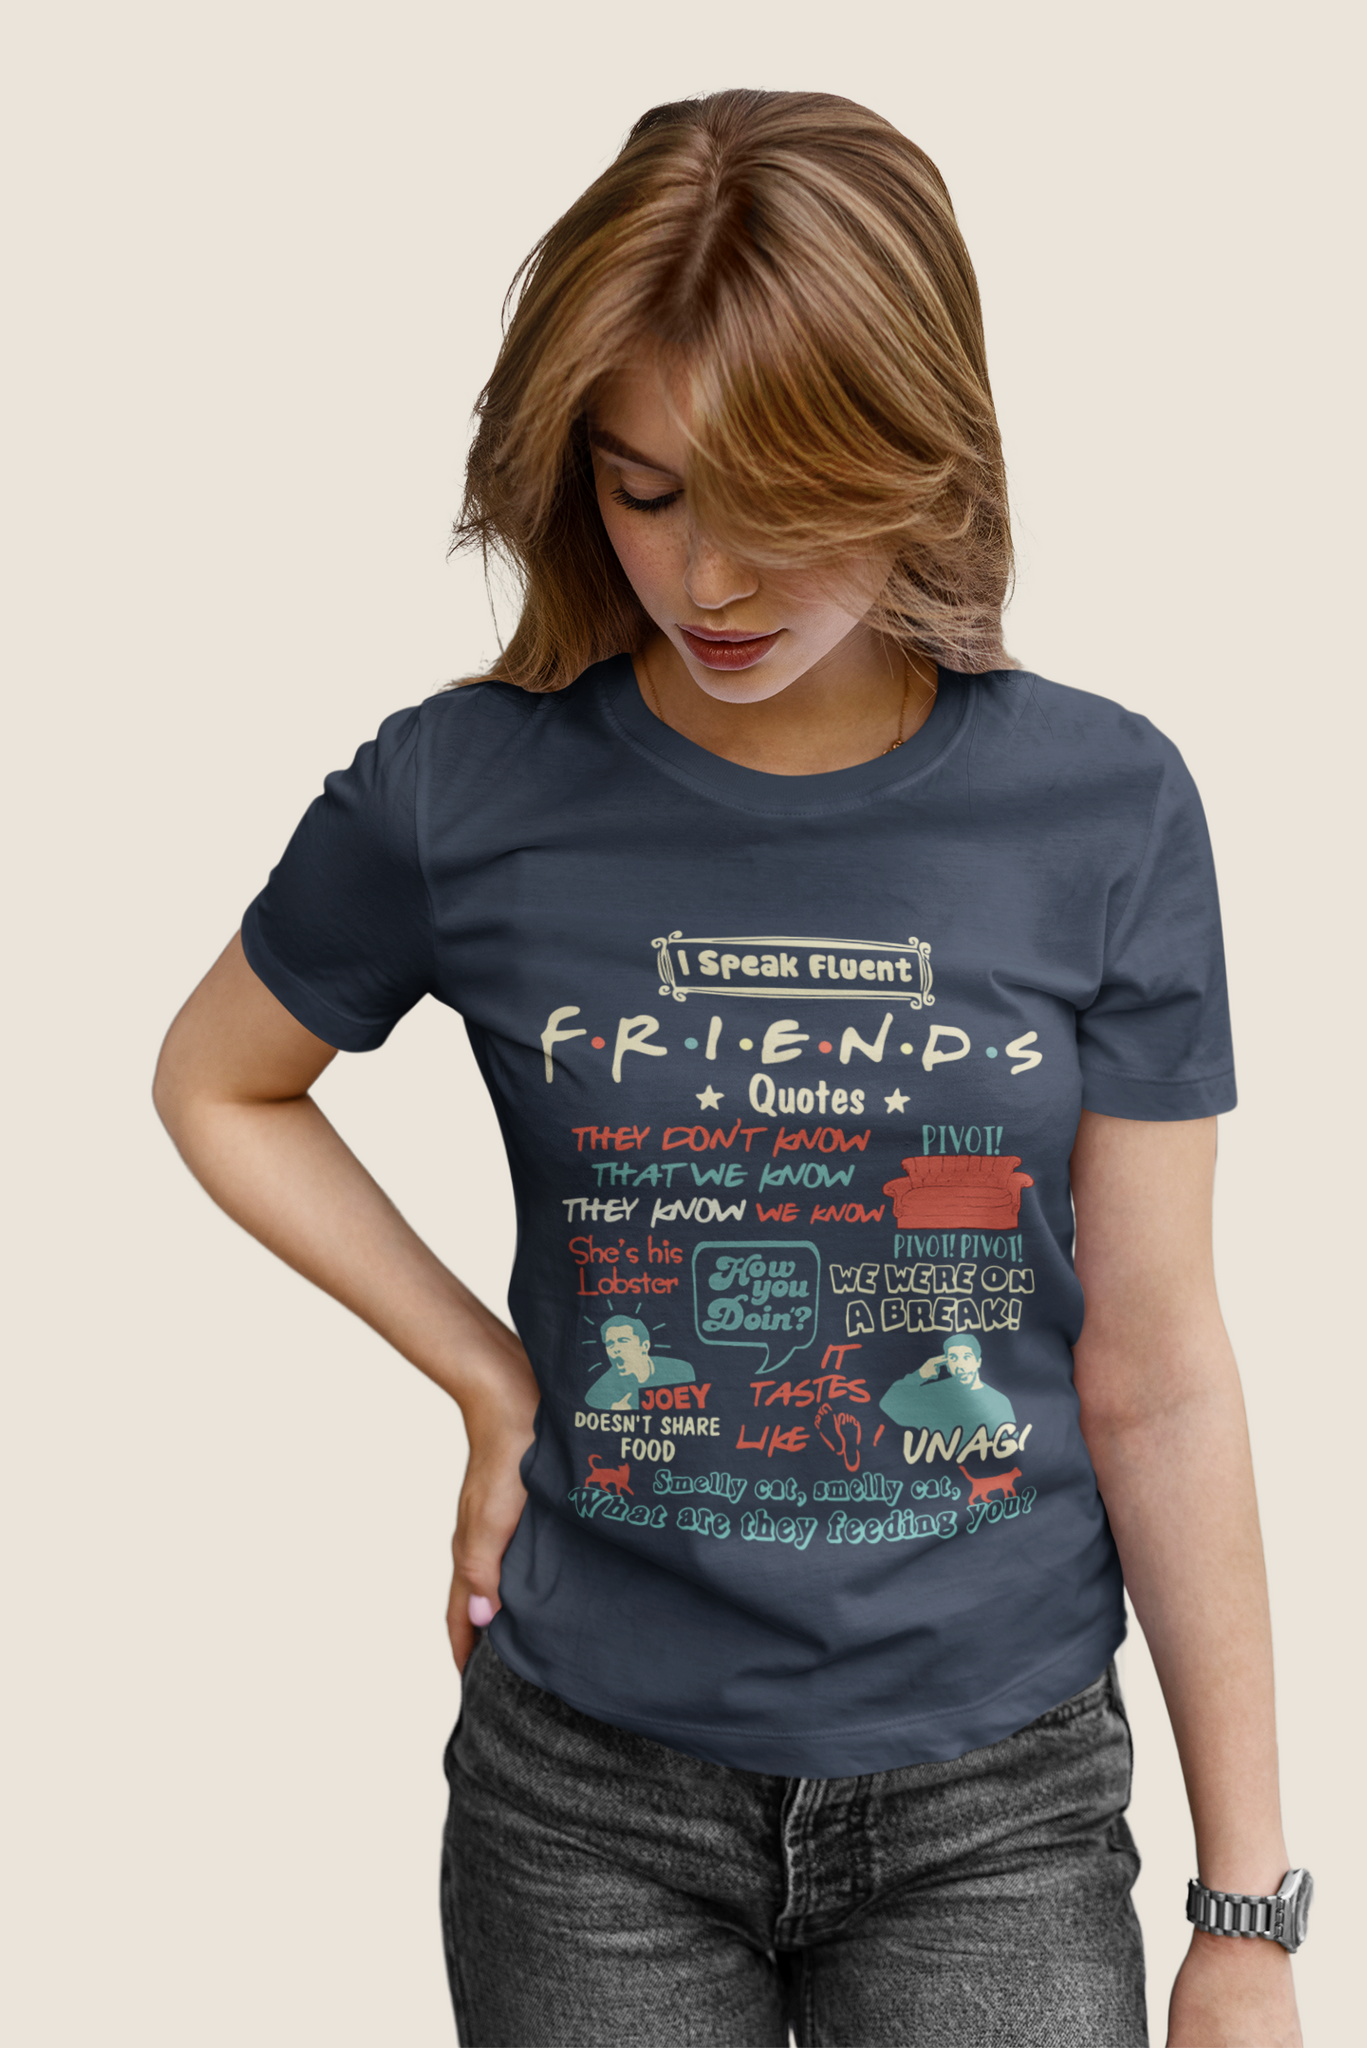 Friends TV Show T Shirt, Joey Tribbiani Ross Geller T Shirt, Friends Show Quotes Tshirt